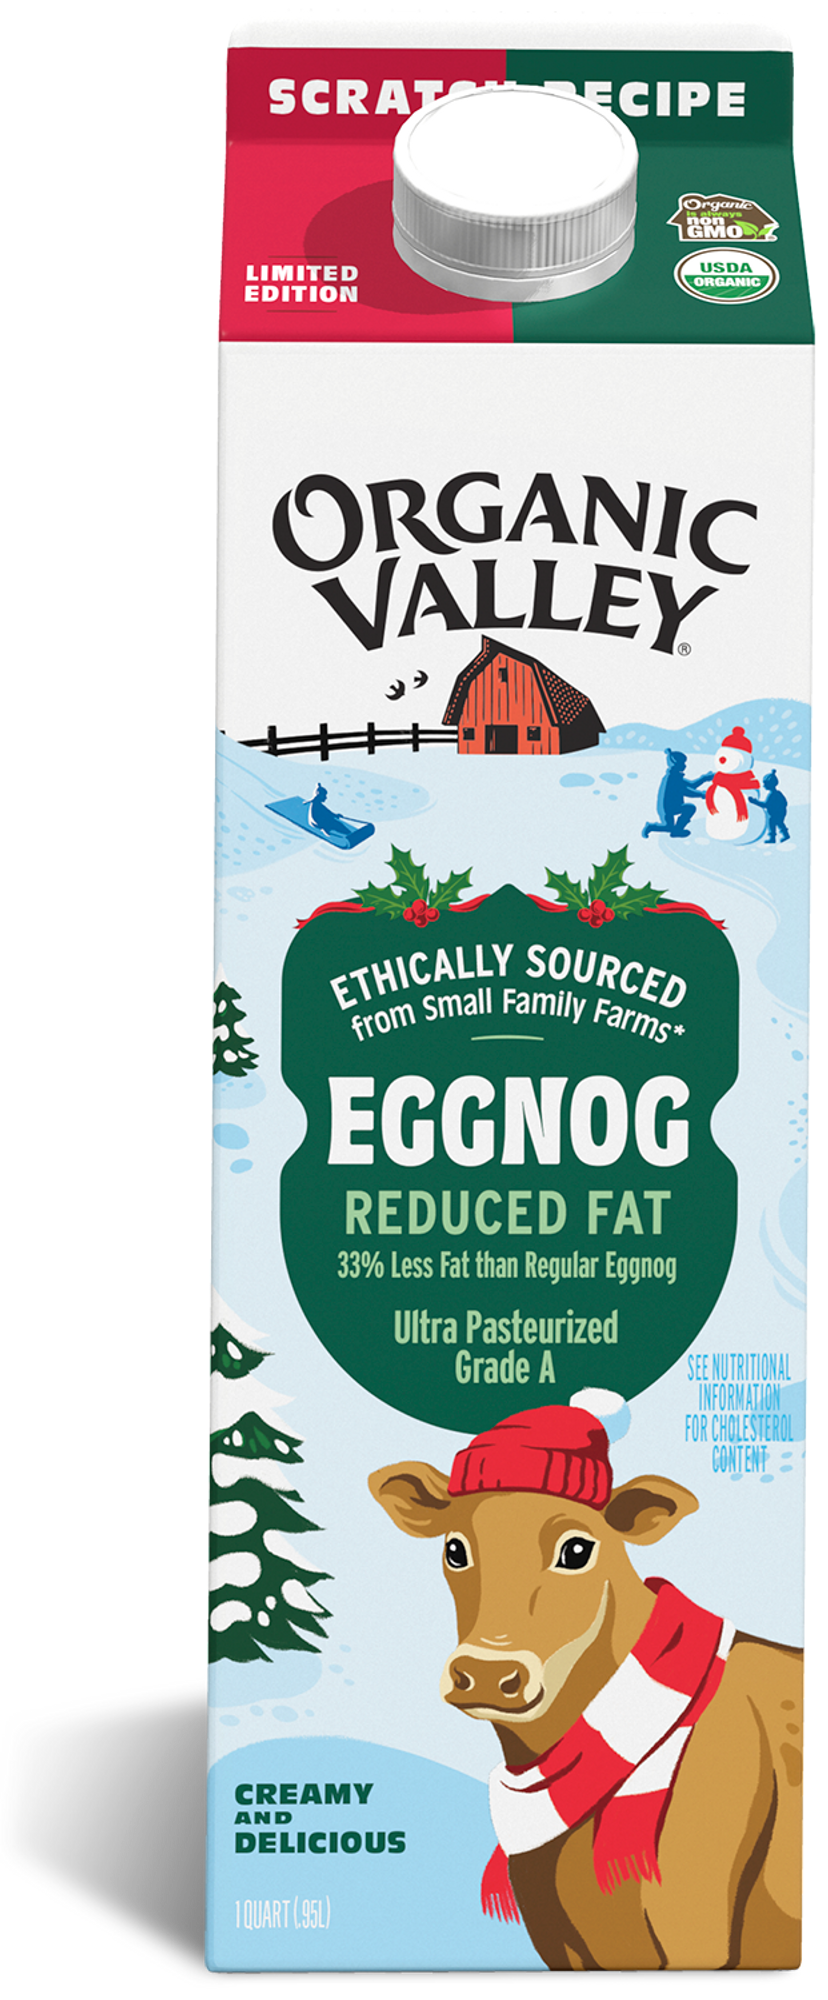 Organic Valley Eggnog.